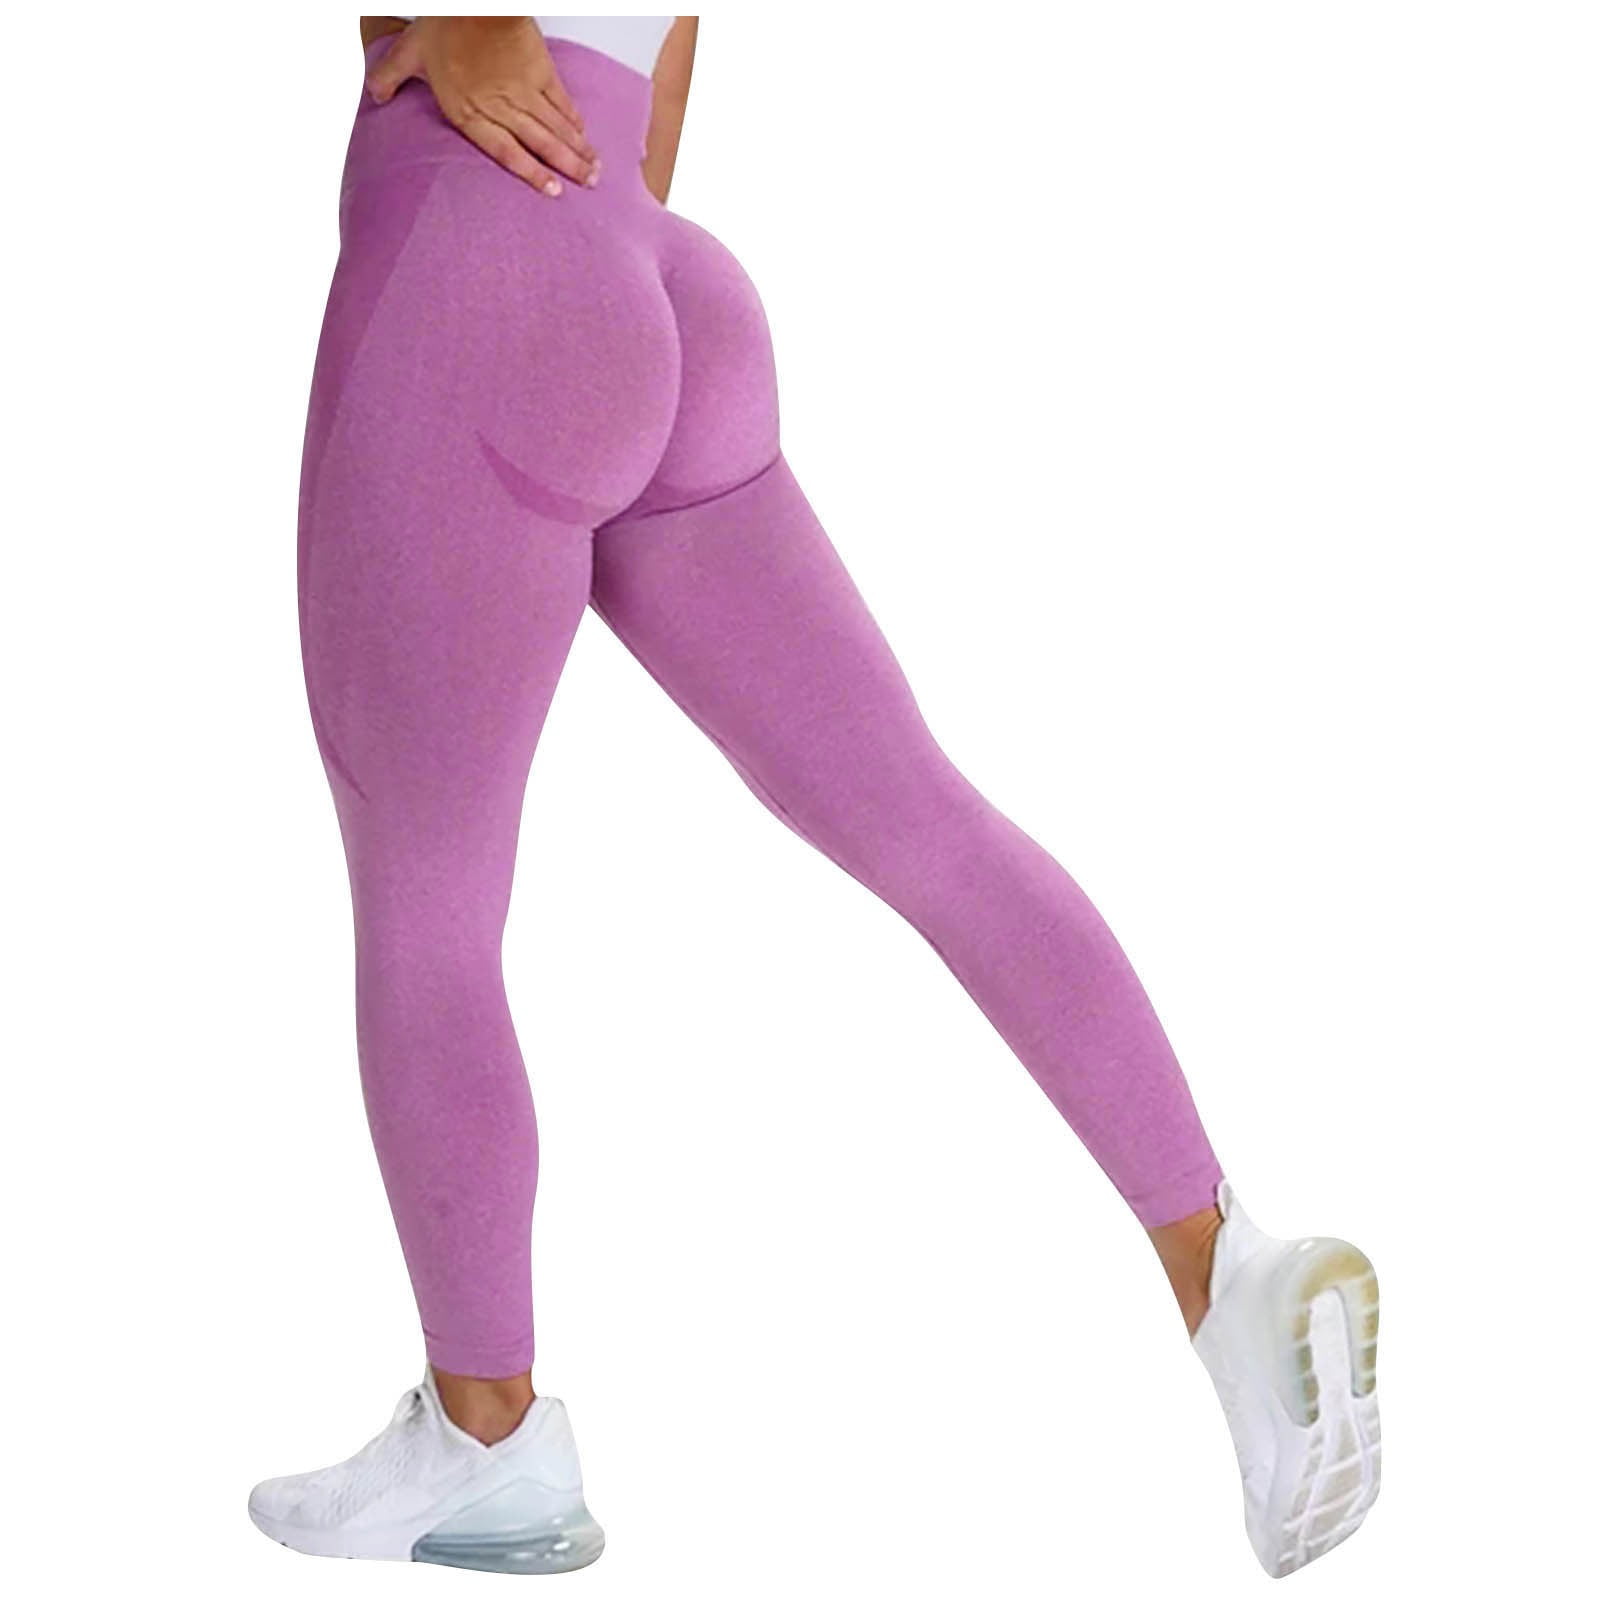 Girls In Yoga Pants - ⚠️It's BIG & Juicy 🍆It's purple ❕It's sheer 👩🏼It's  blonde 👅What more do you want? . . . . . . . . #purple #leggings